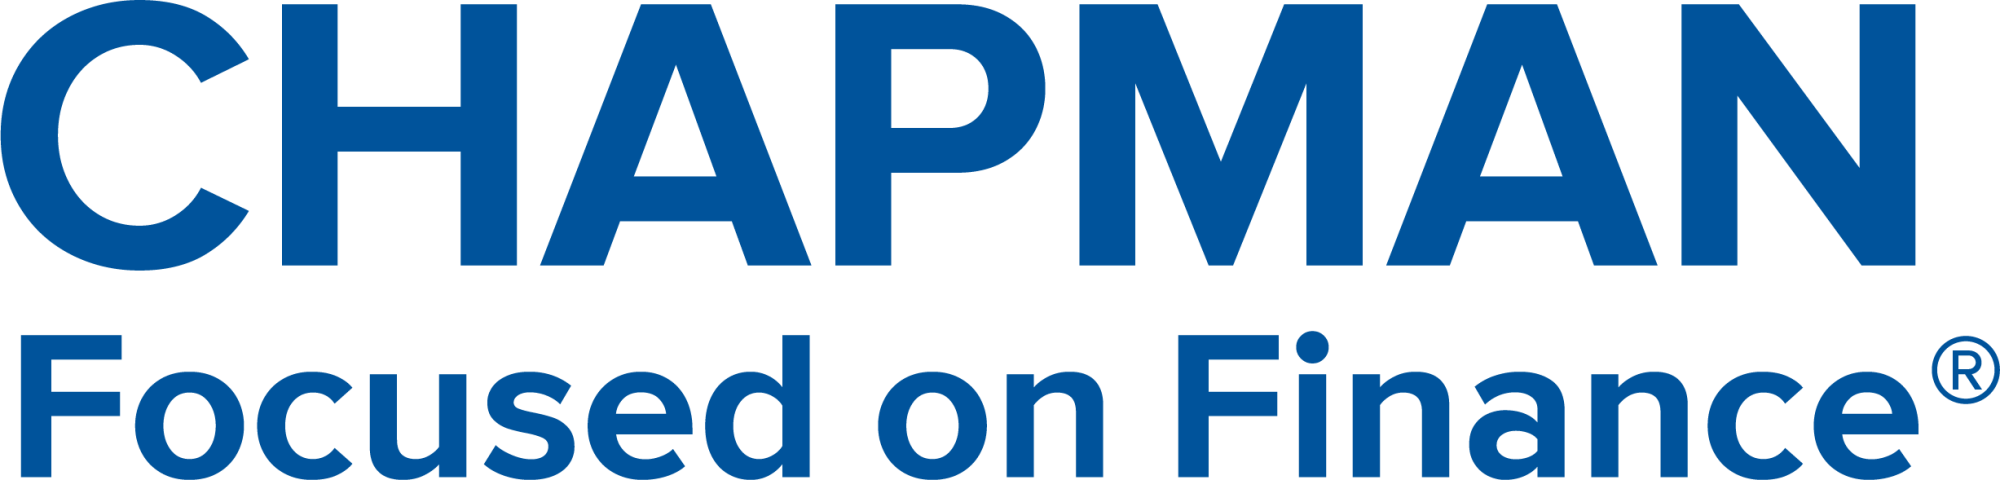 Chapman Focused on Finance logo